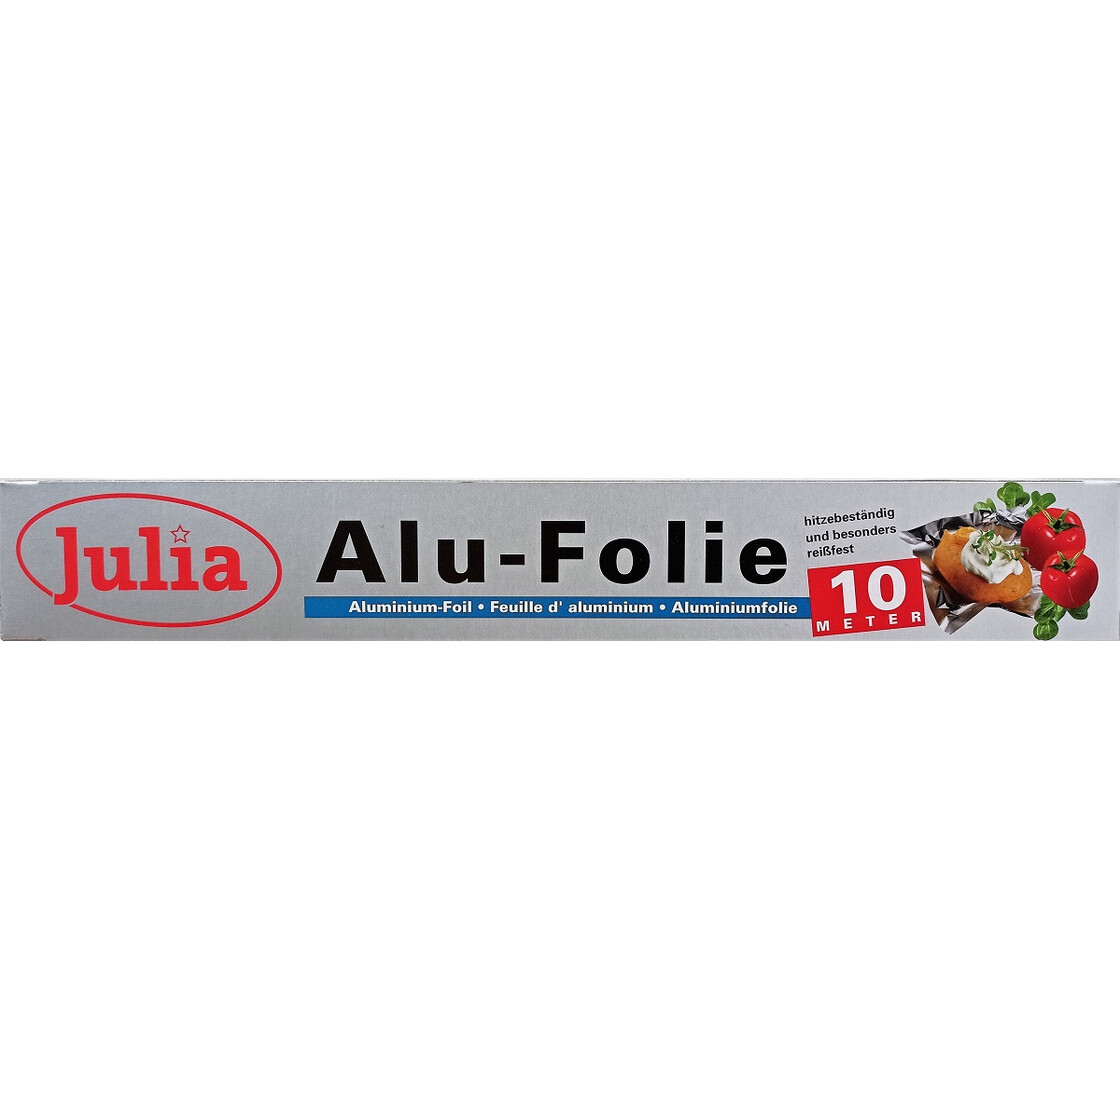 Julia Alu-Folie hitzebeständige und reißfeste Aluminiumfolie 10m x 29, 1,29  €